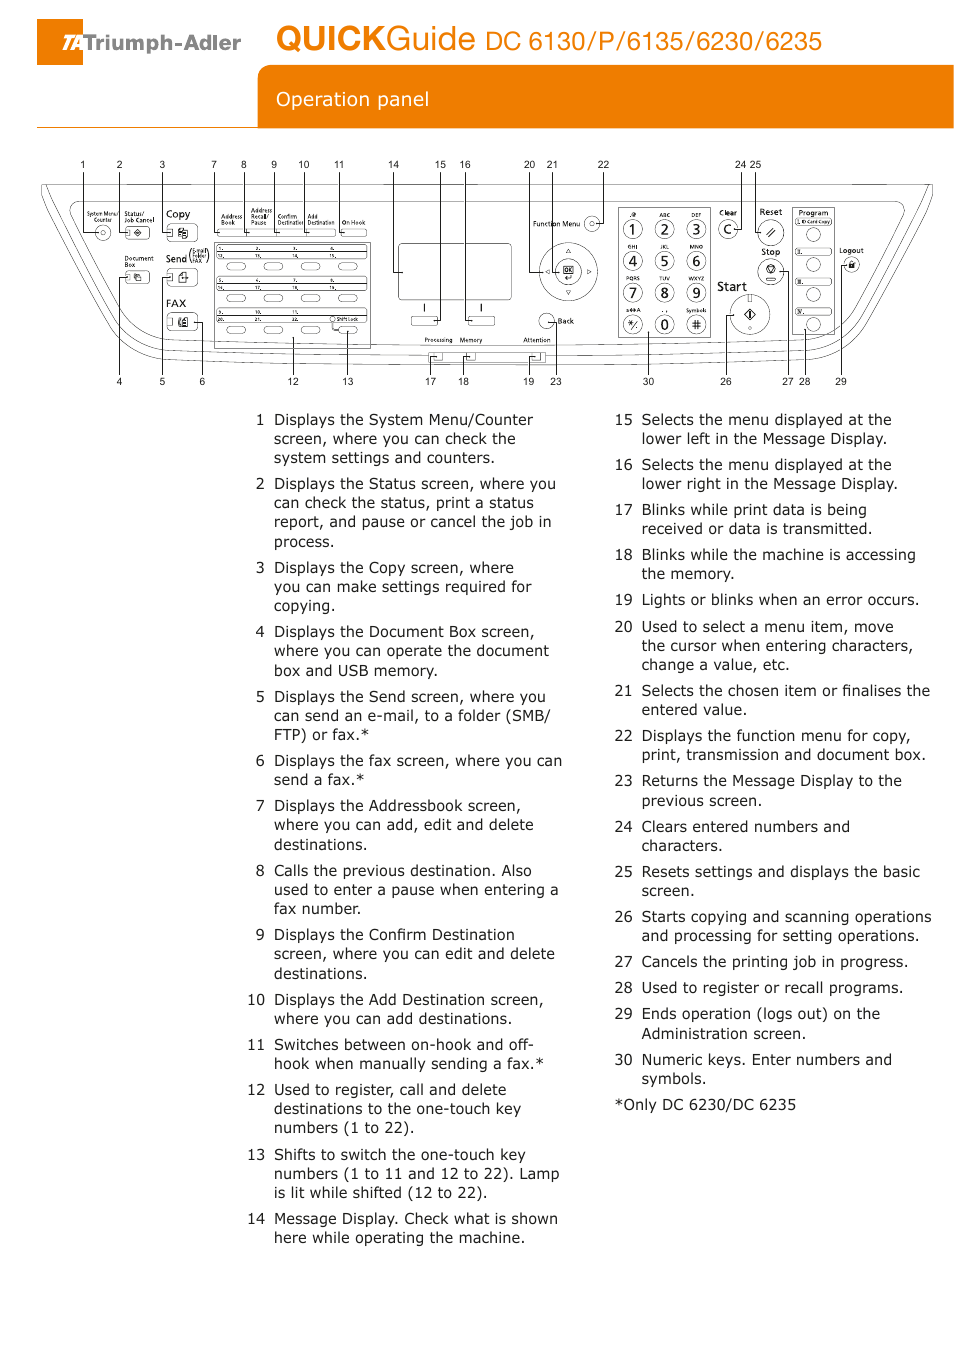 TA Triumph-Adler DC 6130 User Manual | 4 pages